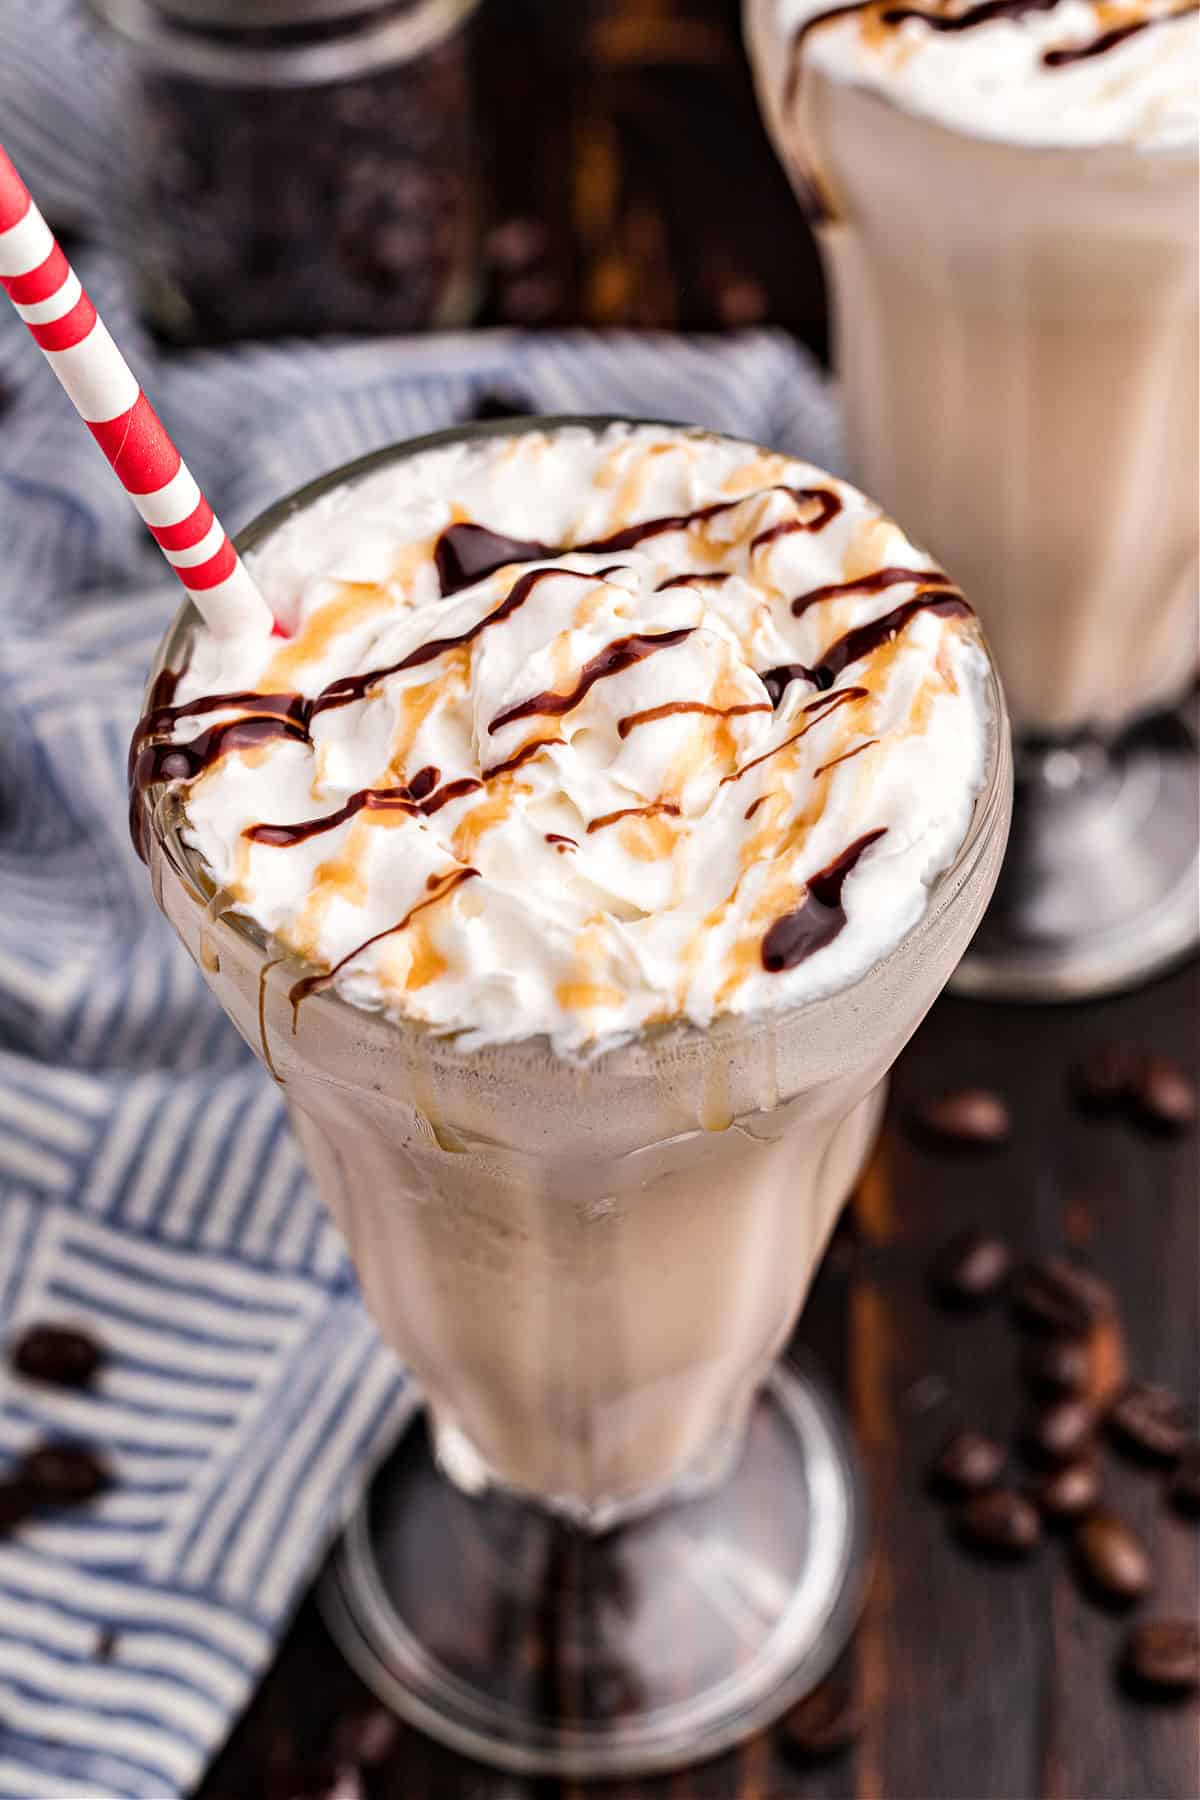 https://www.shugarysweets.com/wp-content/uploads/2012/05/coffee-milkshake-served.jpg